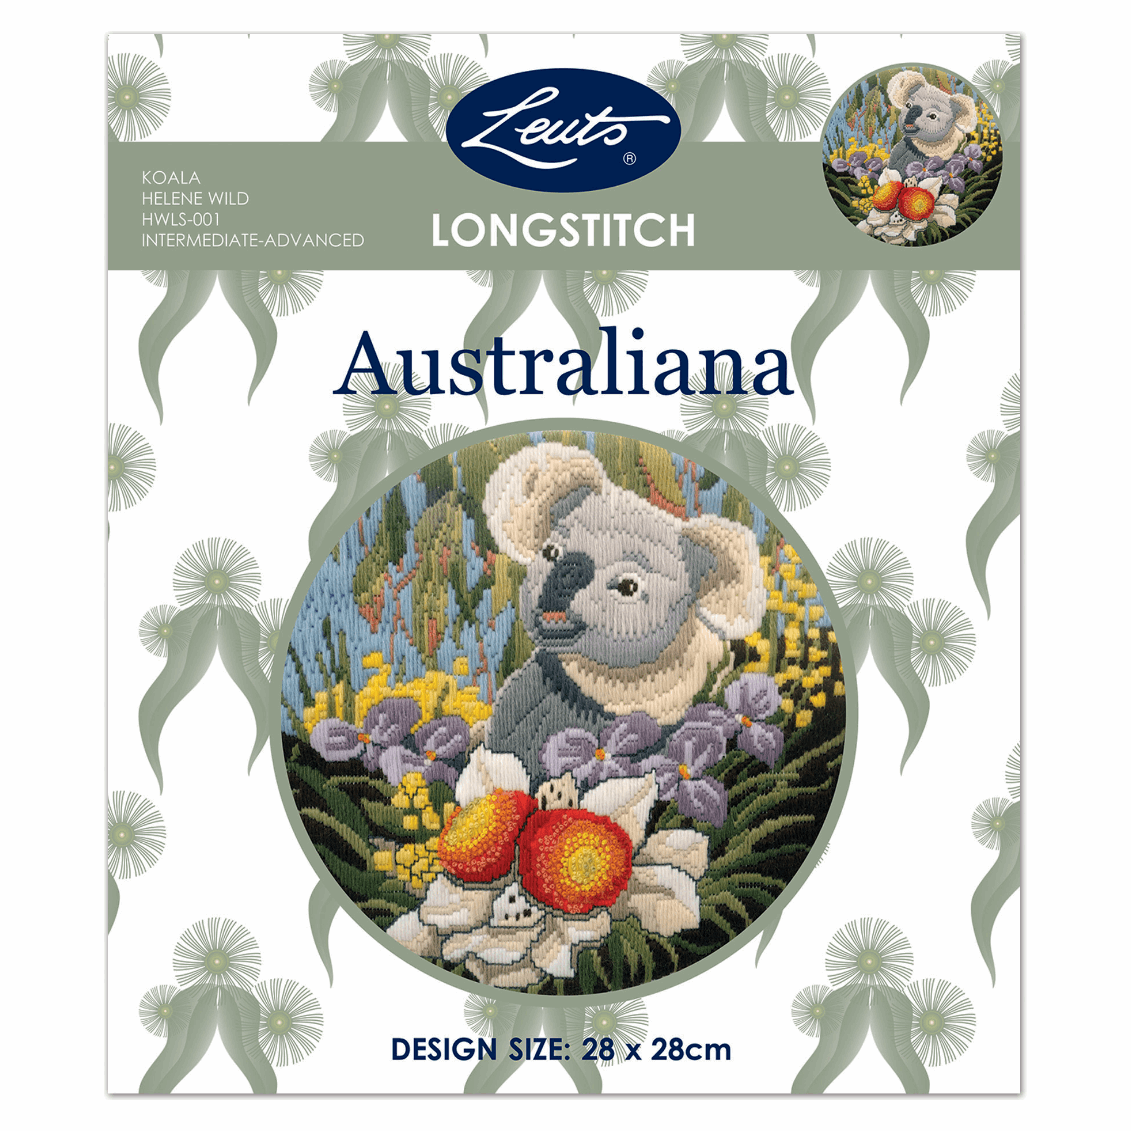 Australiana Longstitch Kits by Helene Wild - 5 styles